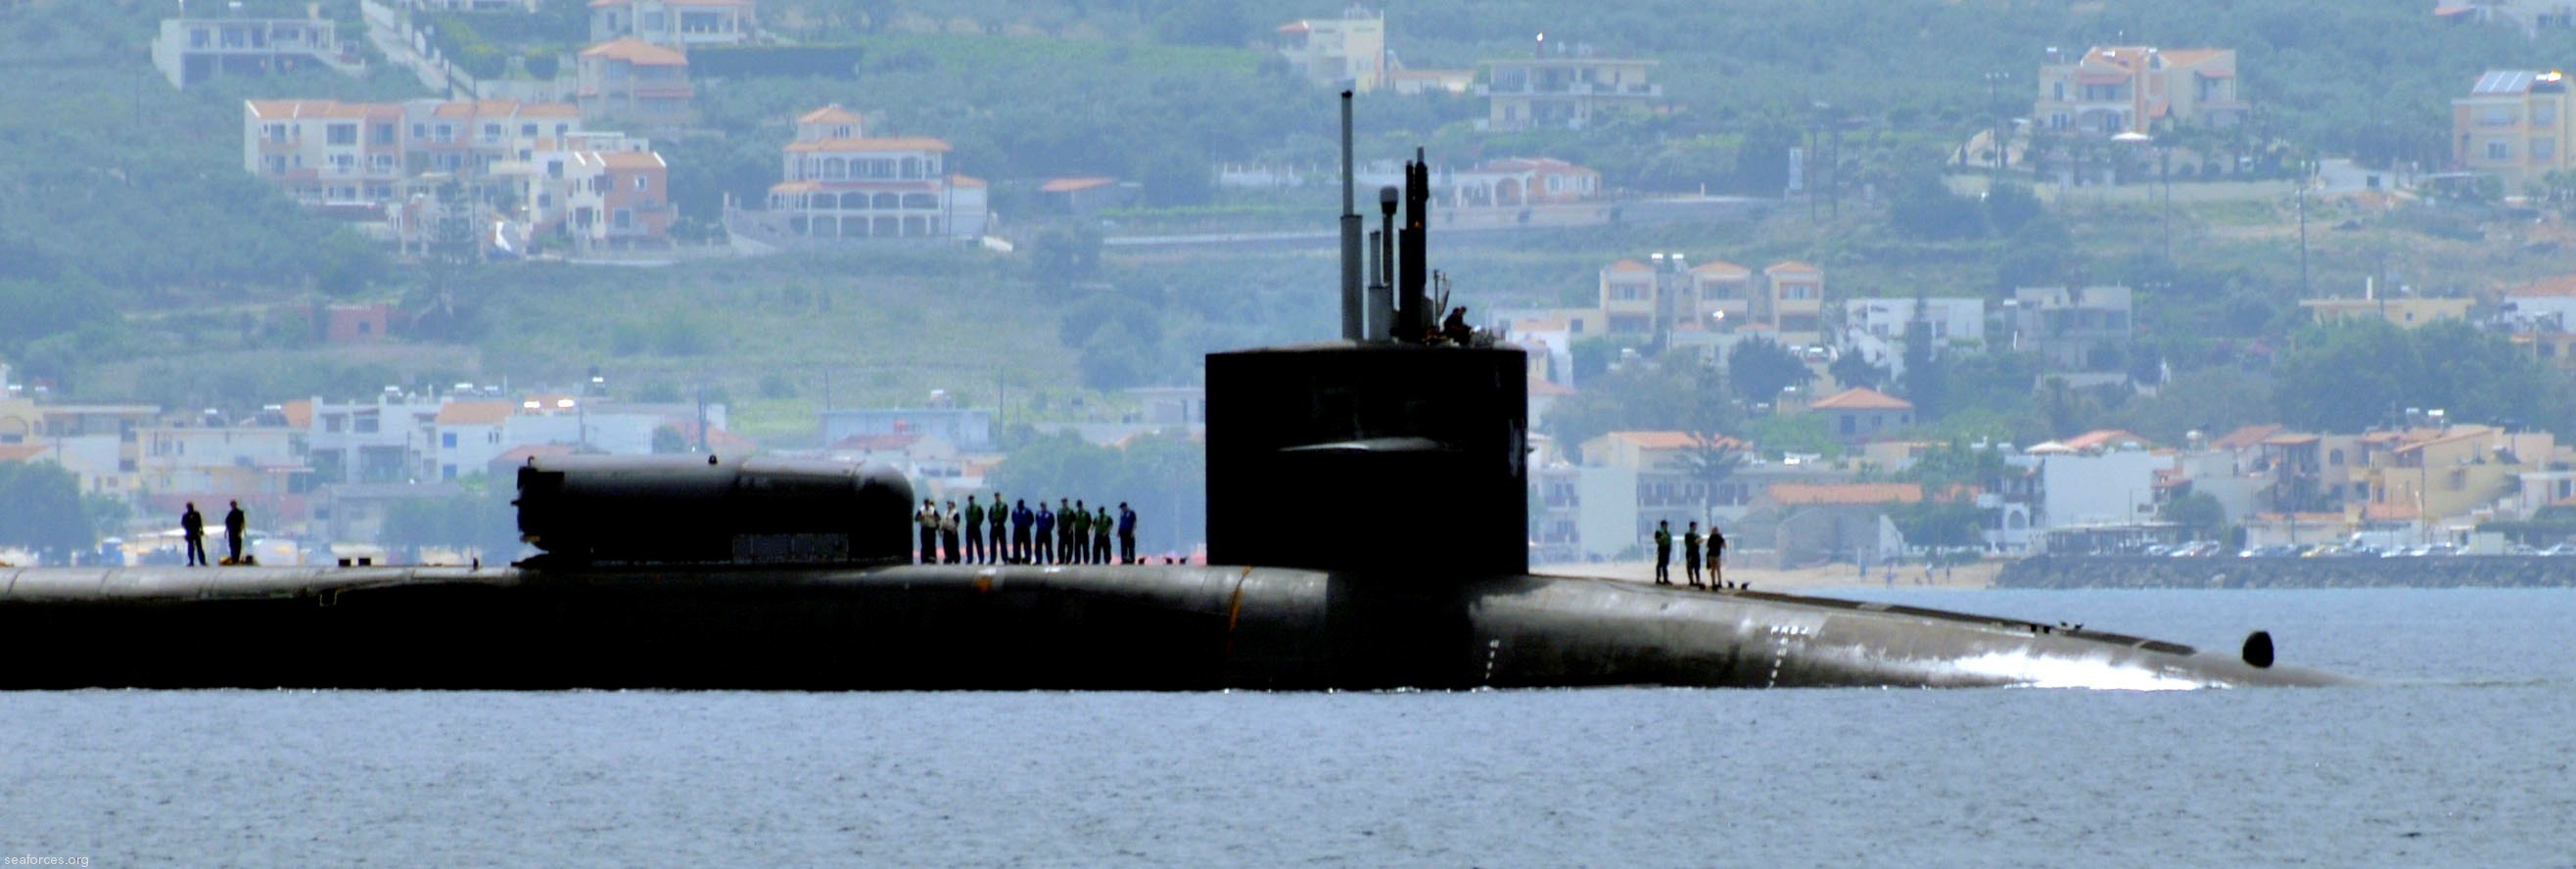 ssgn-729 uss georgia guided missile submarine 2013 15 souda bay